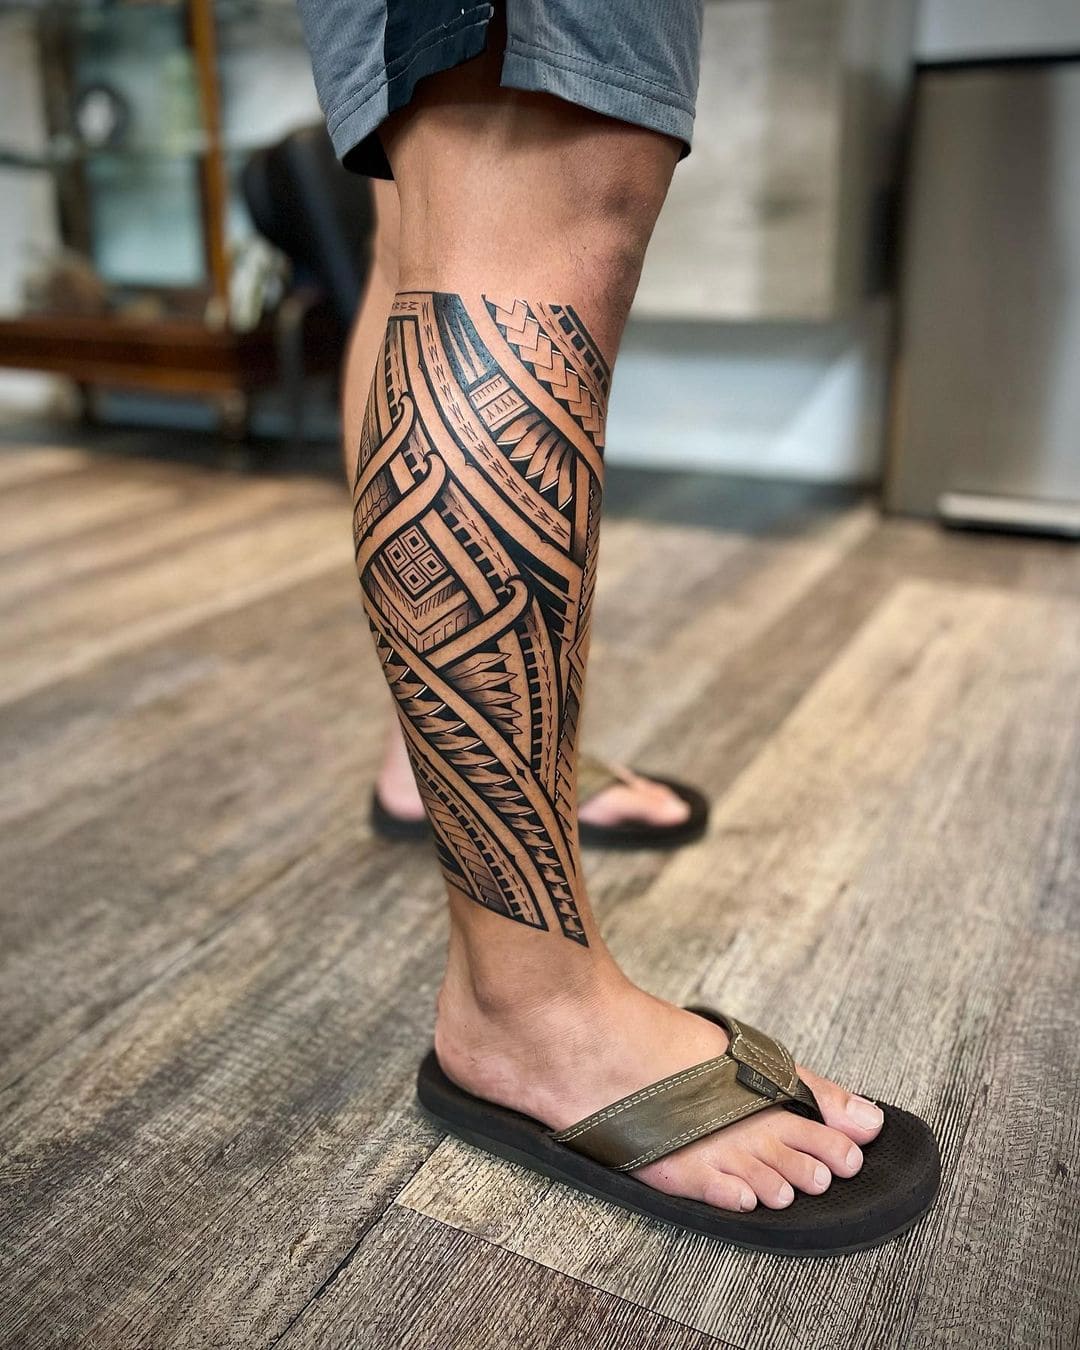 Samoan leg needs filling in : r/TattooDesigns